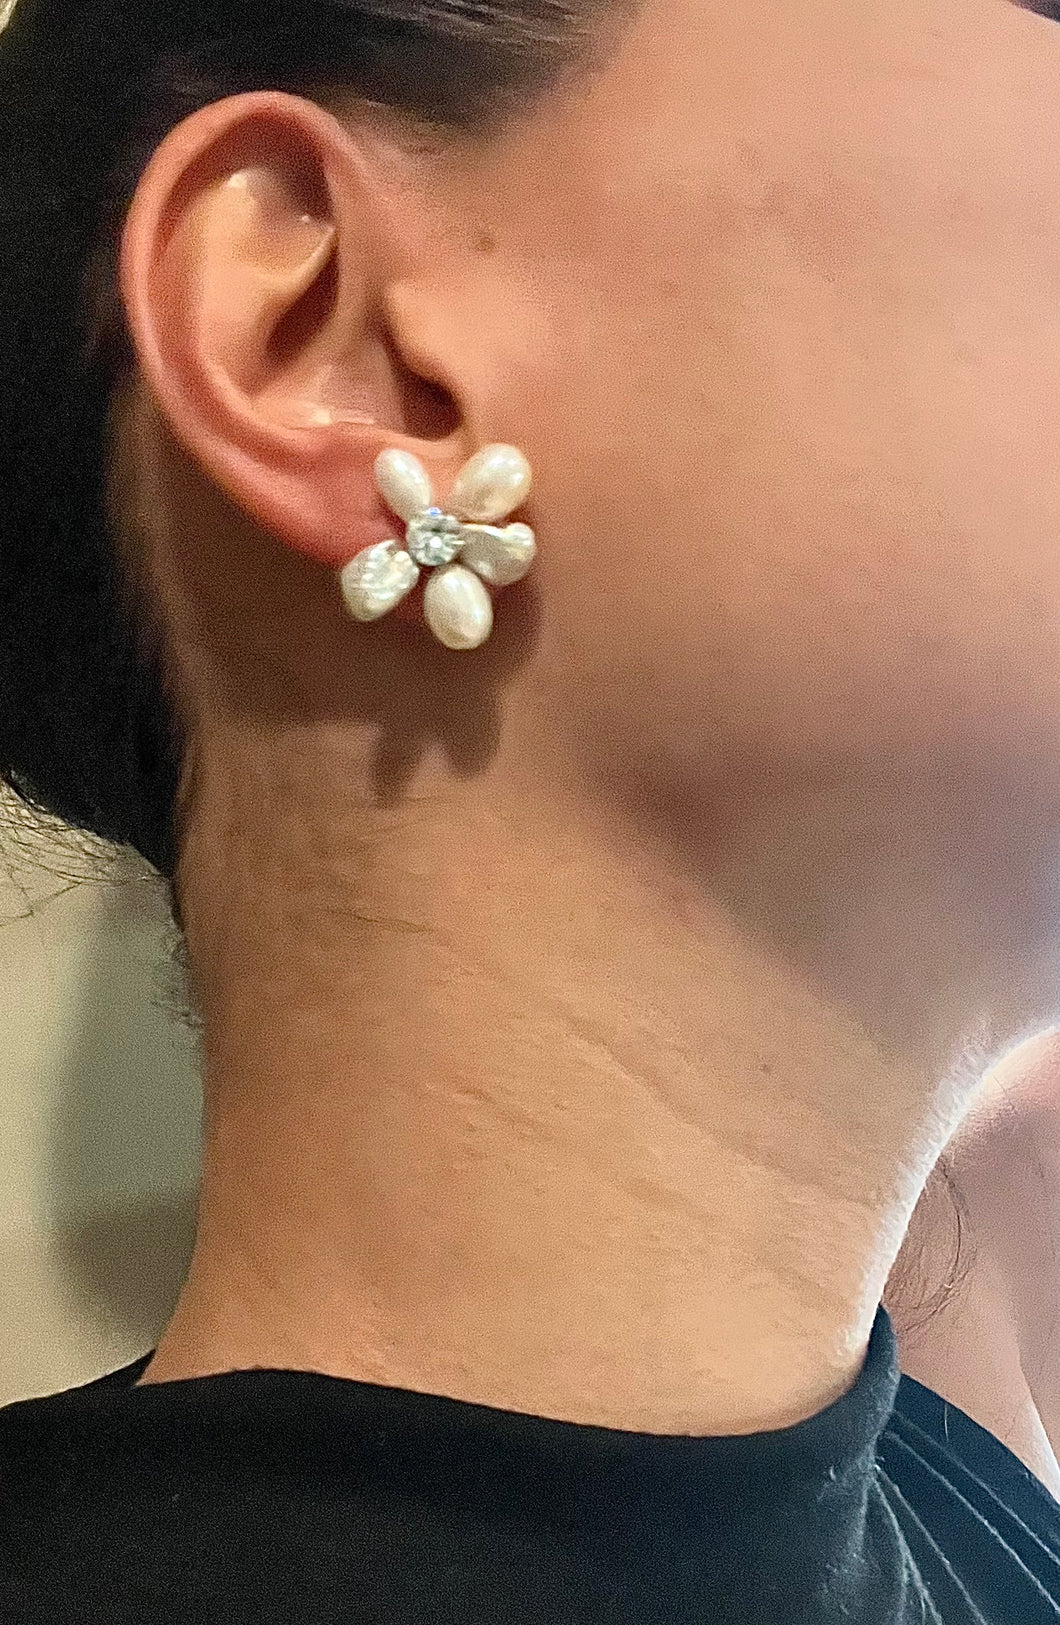 Pearl Flower earrings